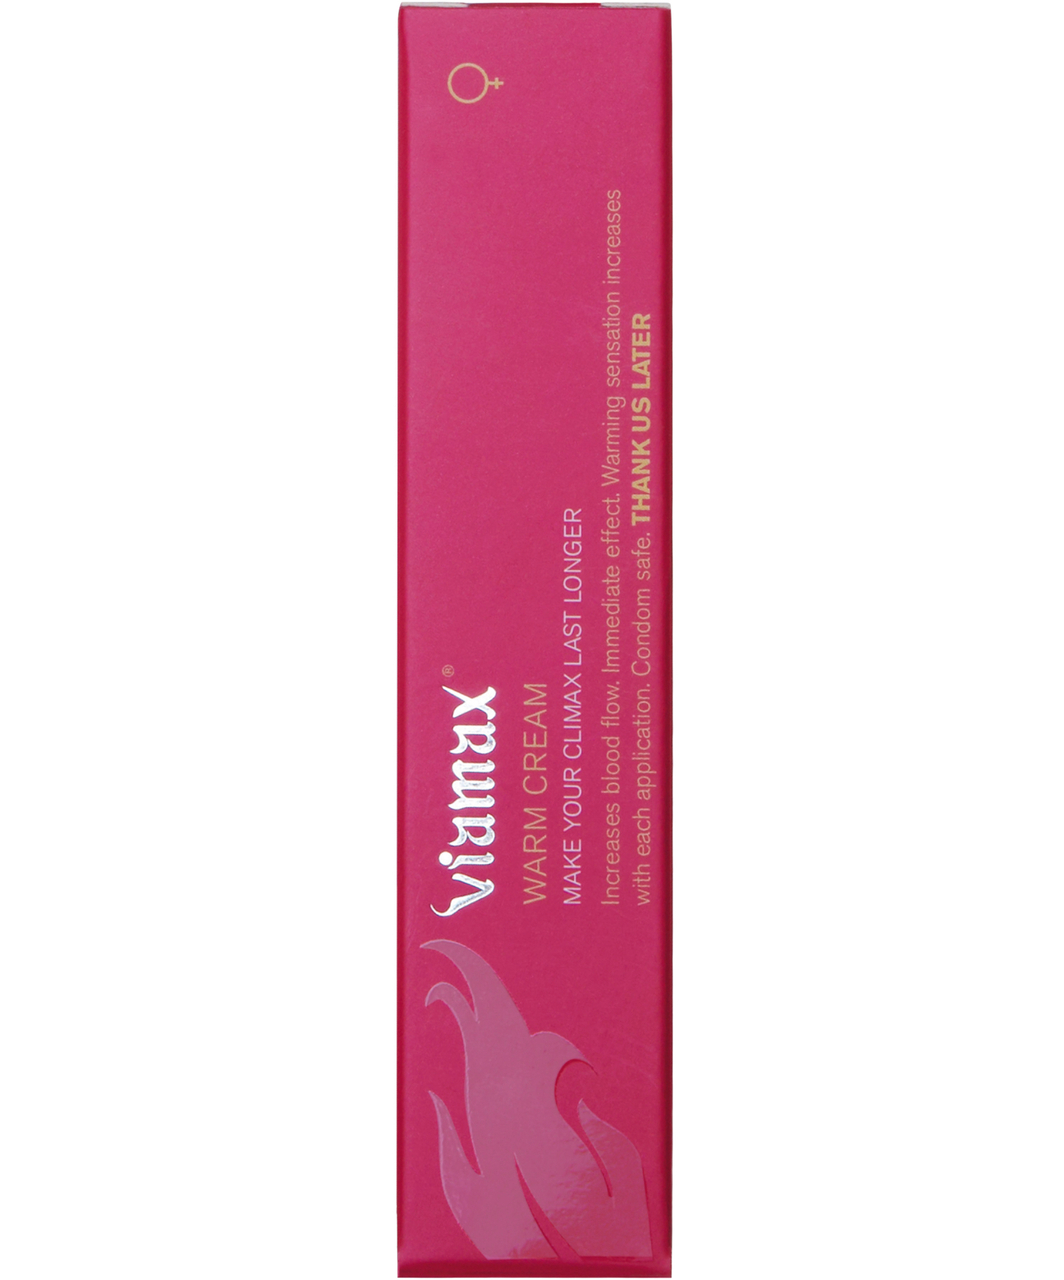 Viamax согревающий стимулирующий гель для женщин (15 мл)